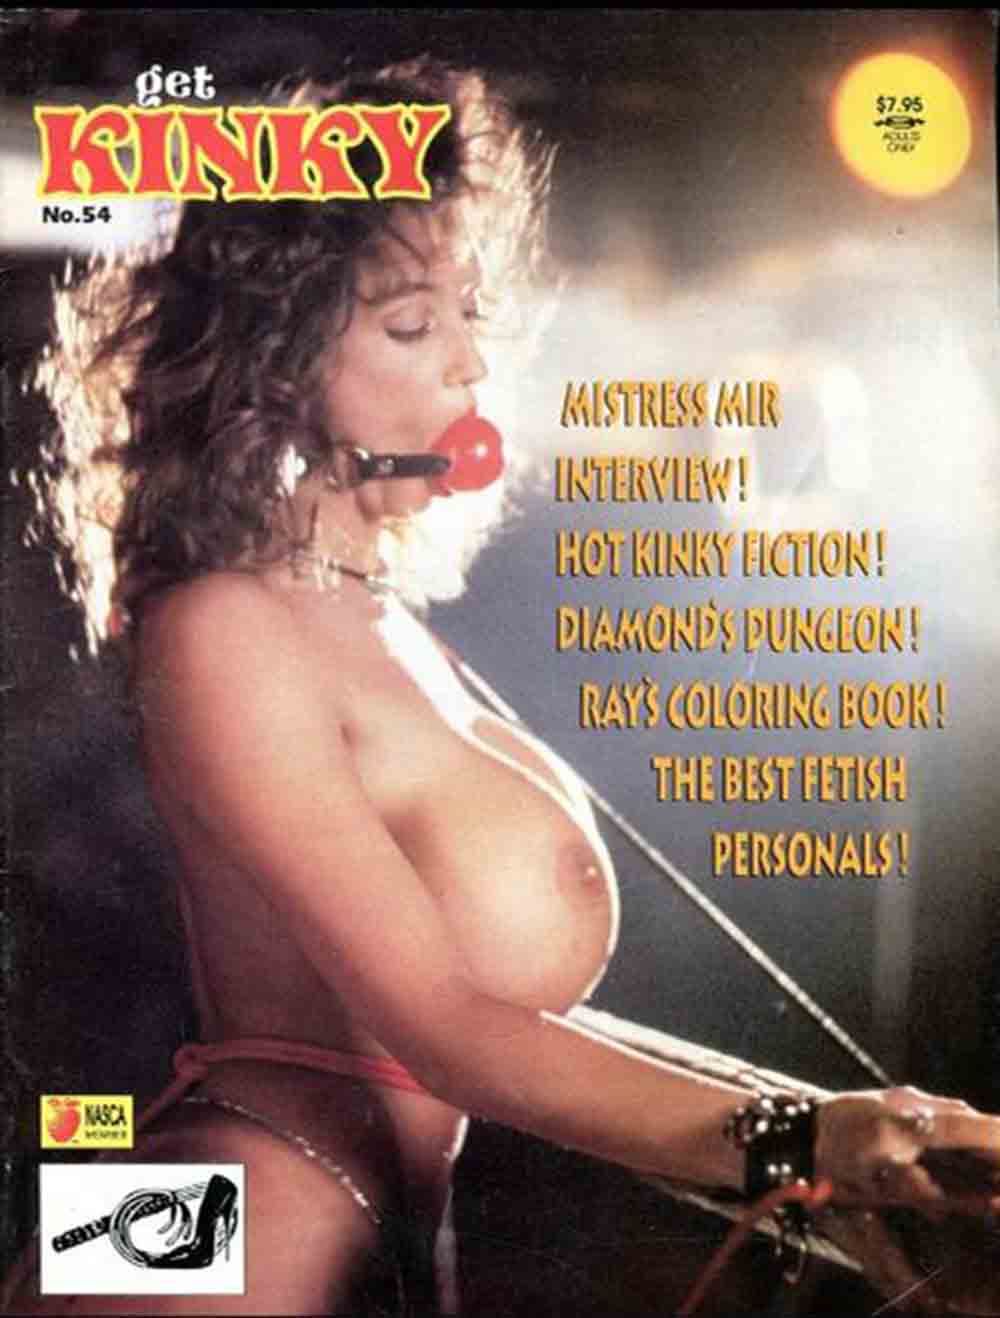 Get Kinky # 54 magazine back issue Get Kinky magizine back copy 